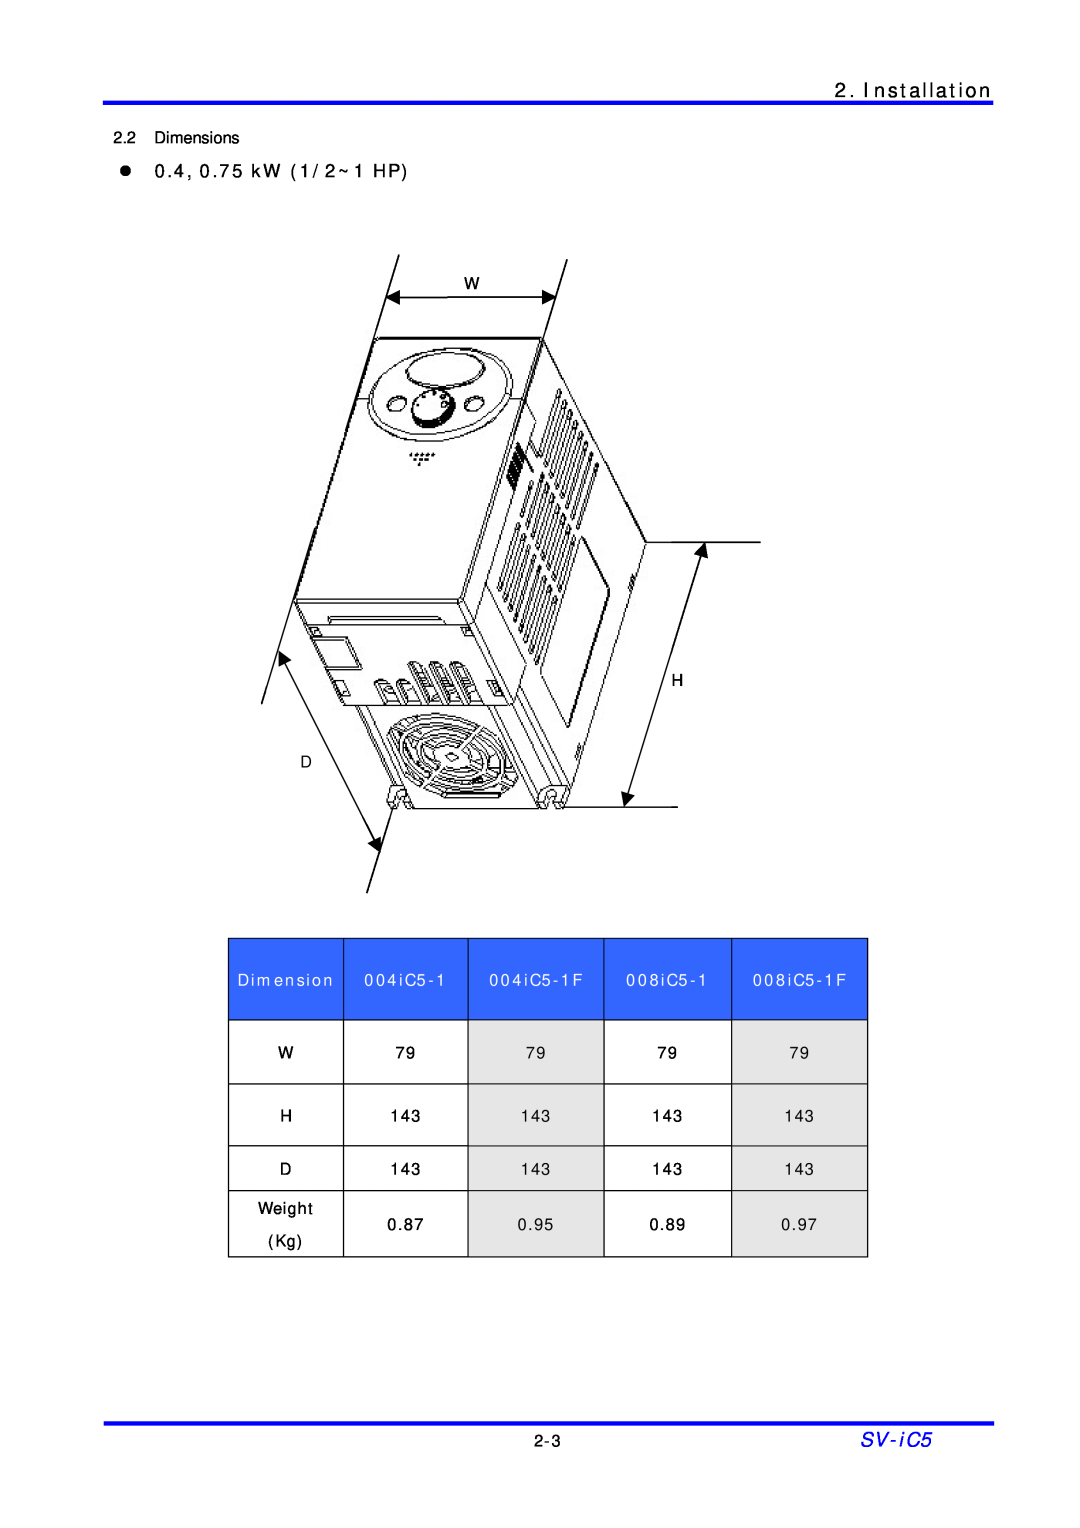 LG Electronics SV-iC5 Series manual Installation, Dimension, 004iC5-1F, 008iC5-1F 